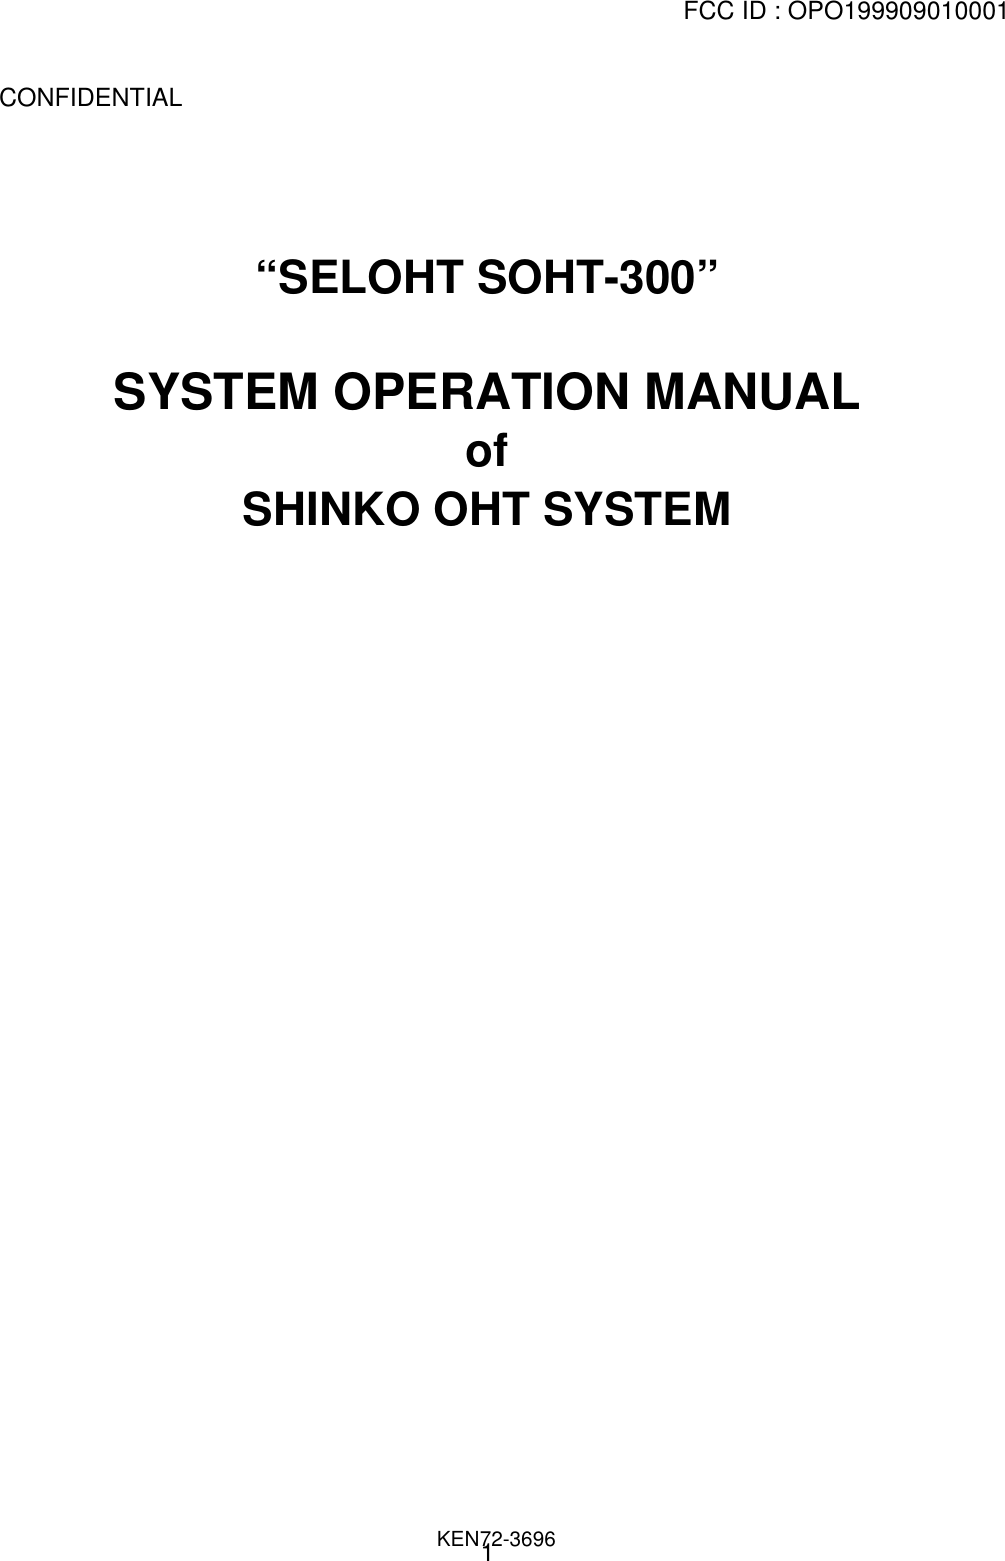 FCC ID : OPO199909010001                                                                              KEN72-36961  CONFIDENTIAL“SELOHT SOHT-300”SYSTEM OPERATION MANUALofSHINKO OHT SYSTEM